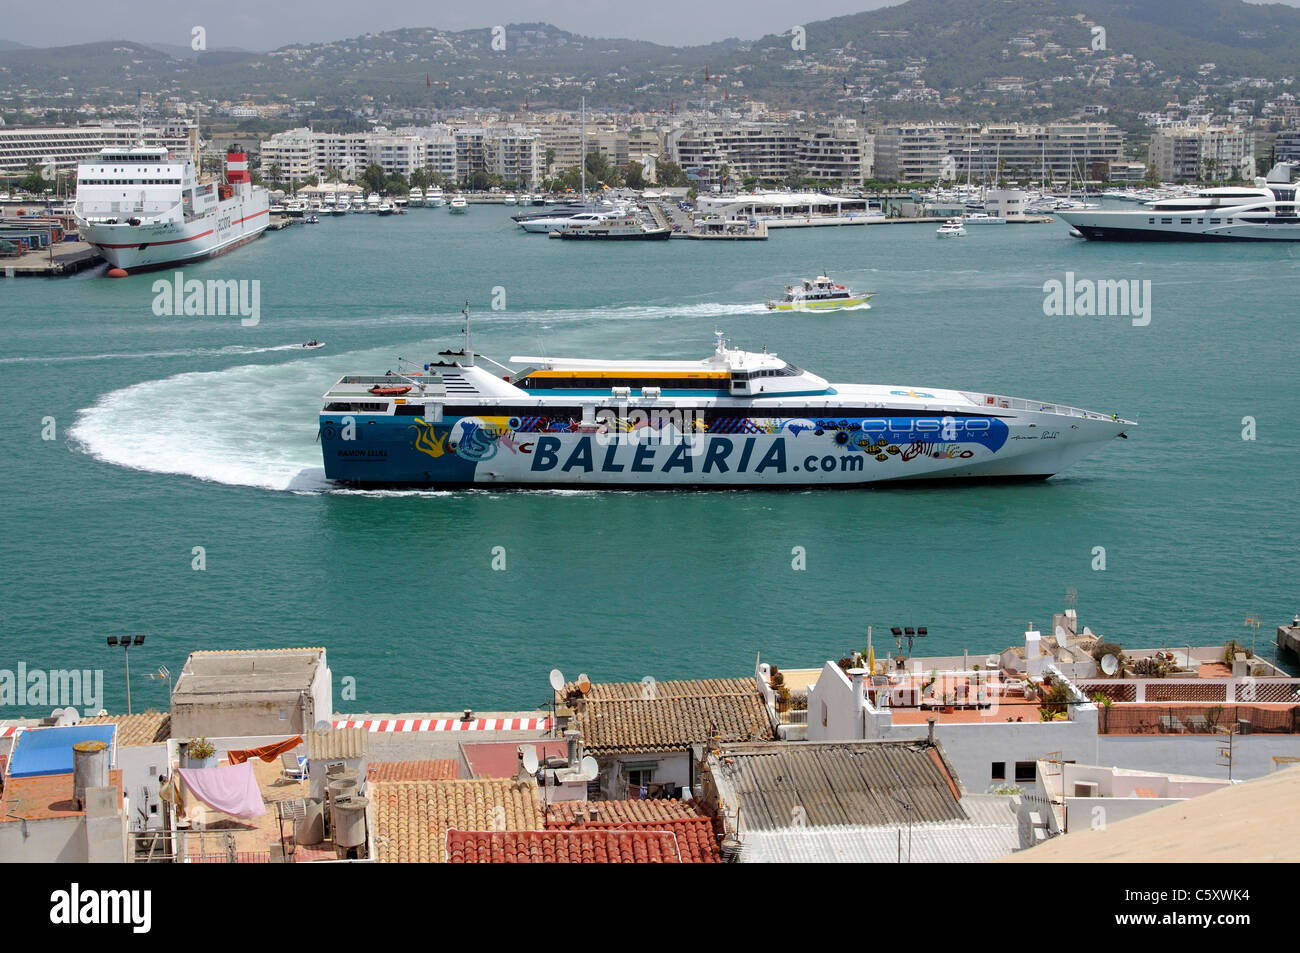 Roro fast ferry Ramon Llull of the Balearia company enters Eivissa port on the Spanish island of Ibiza Stock Photo